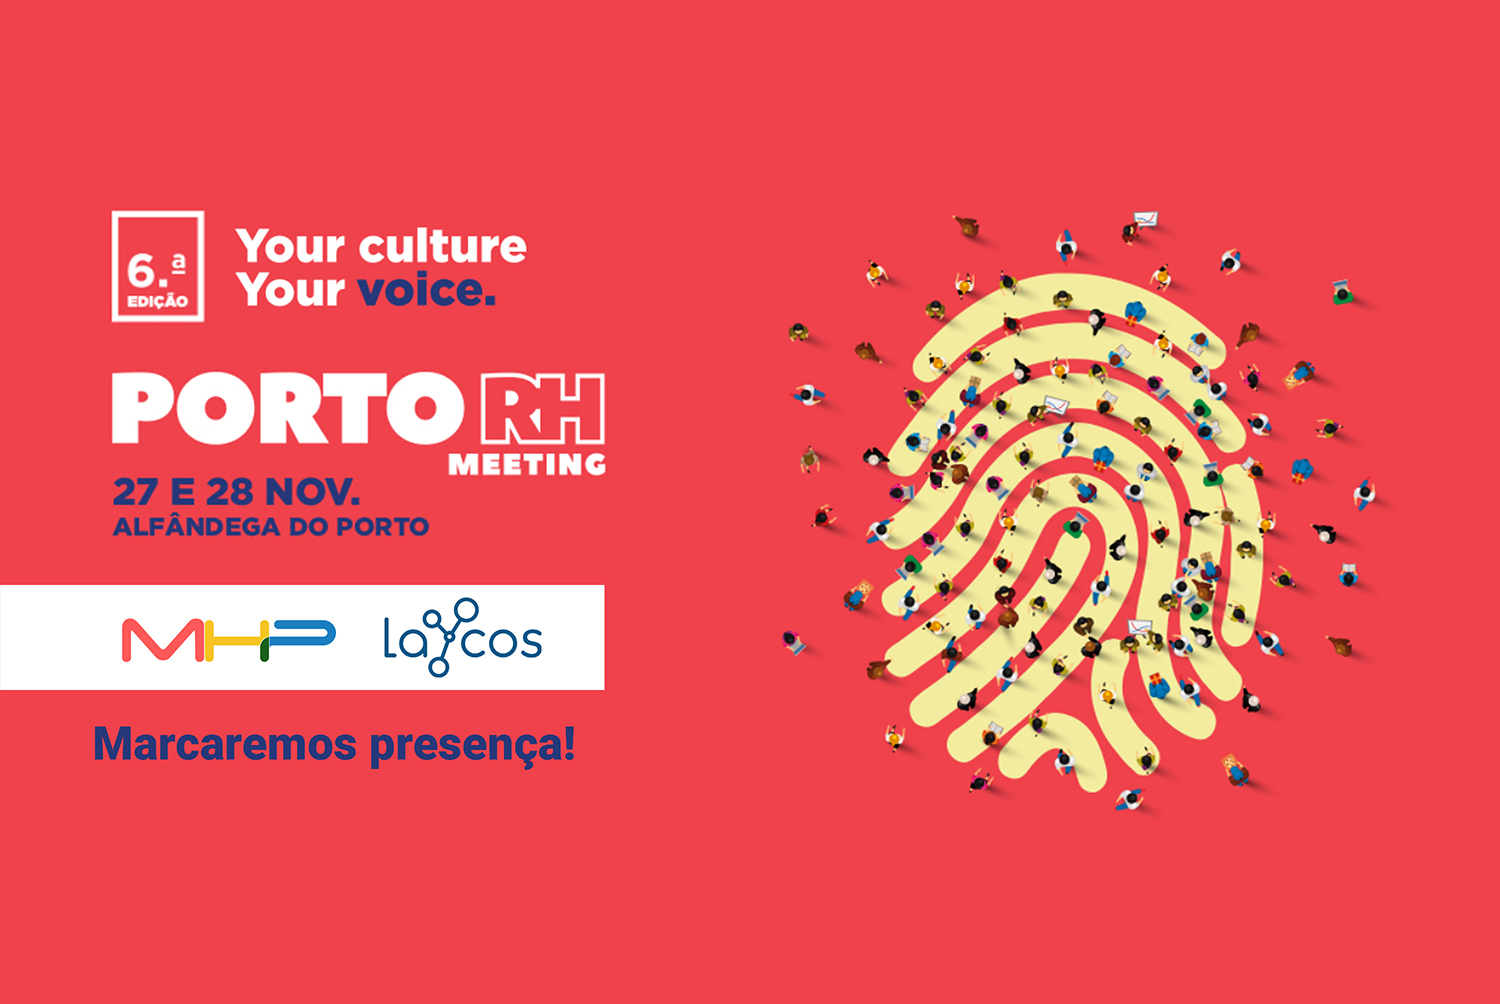 porto_rh_meeting